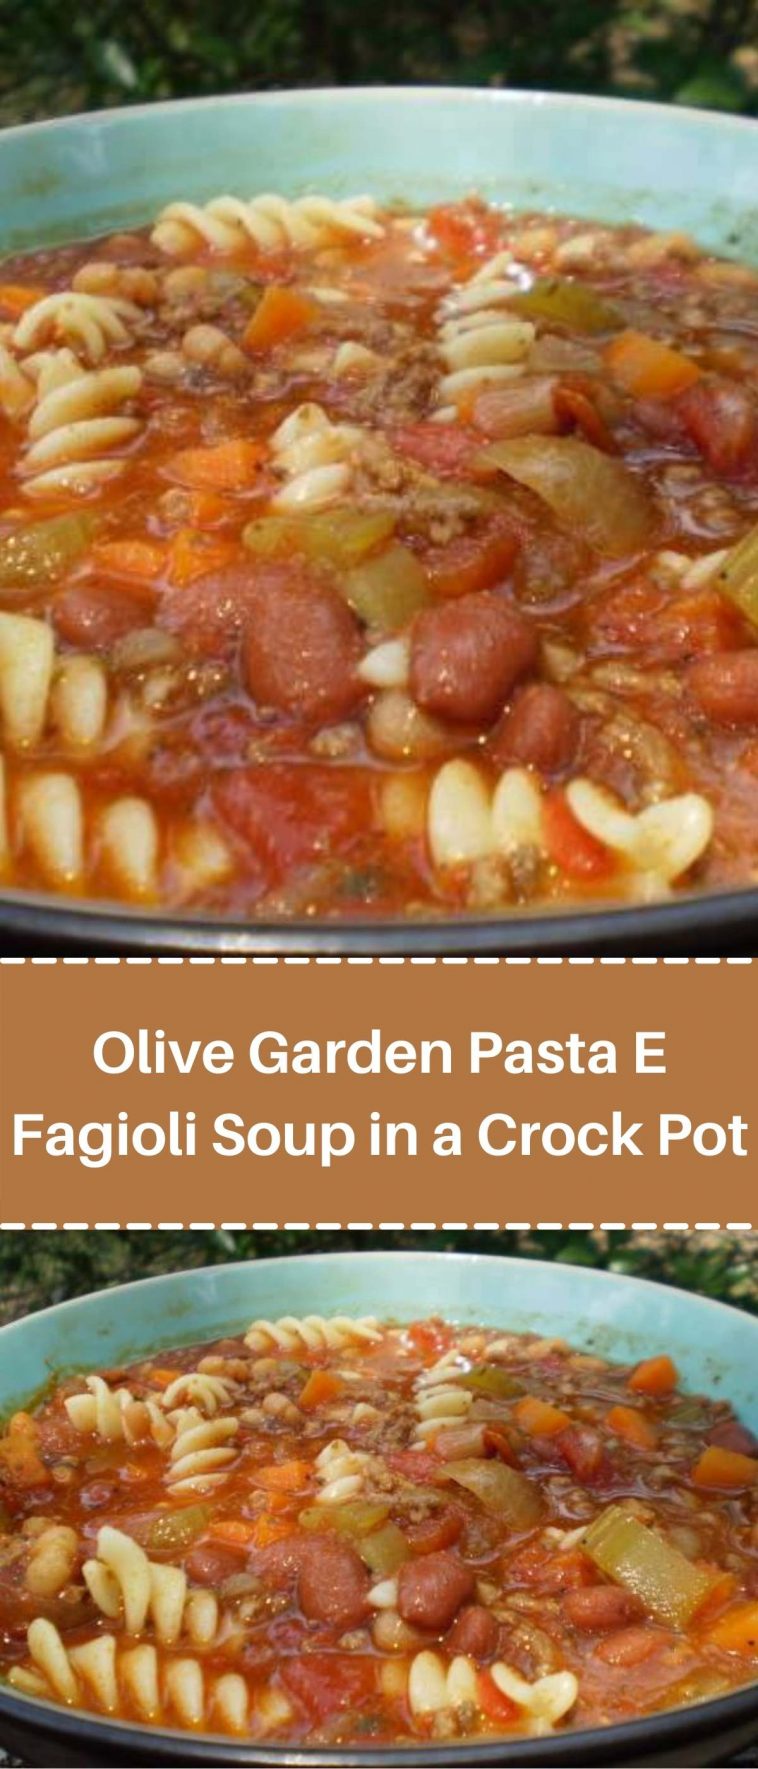 Olive Garden Pasta E Fagioli Soup in a Crock Pot